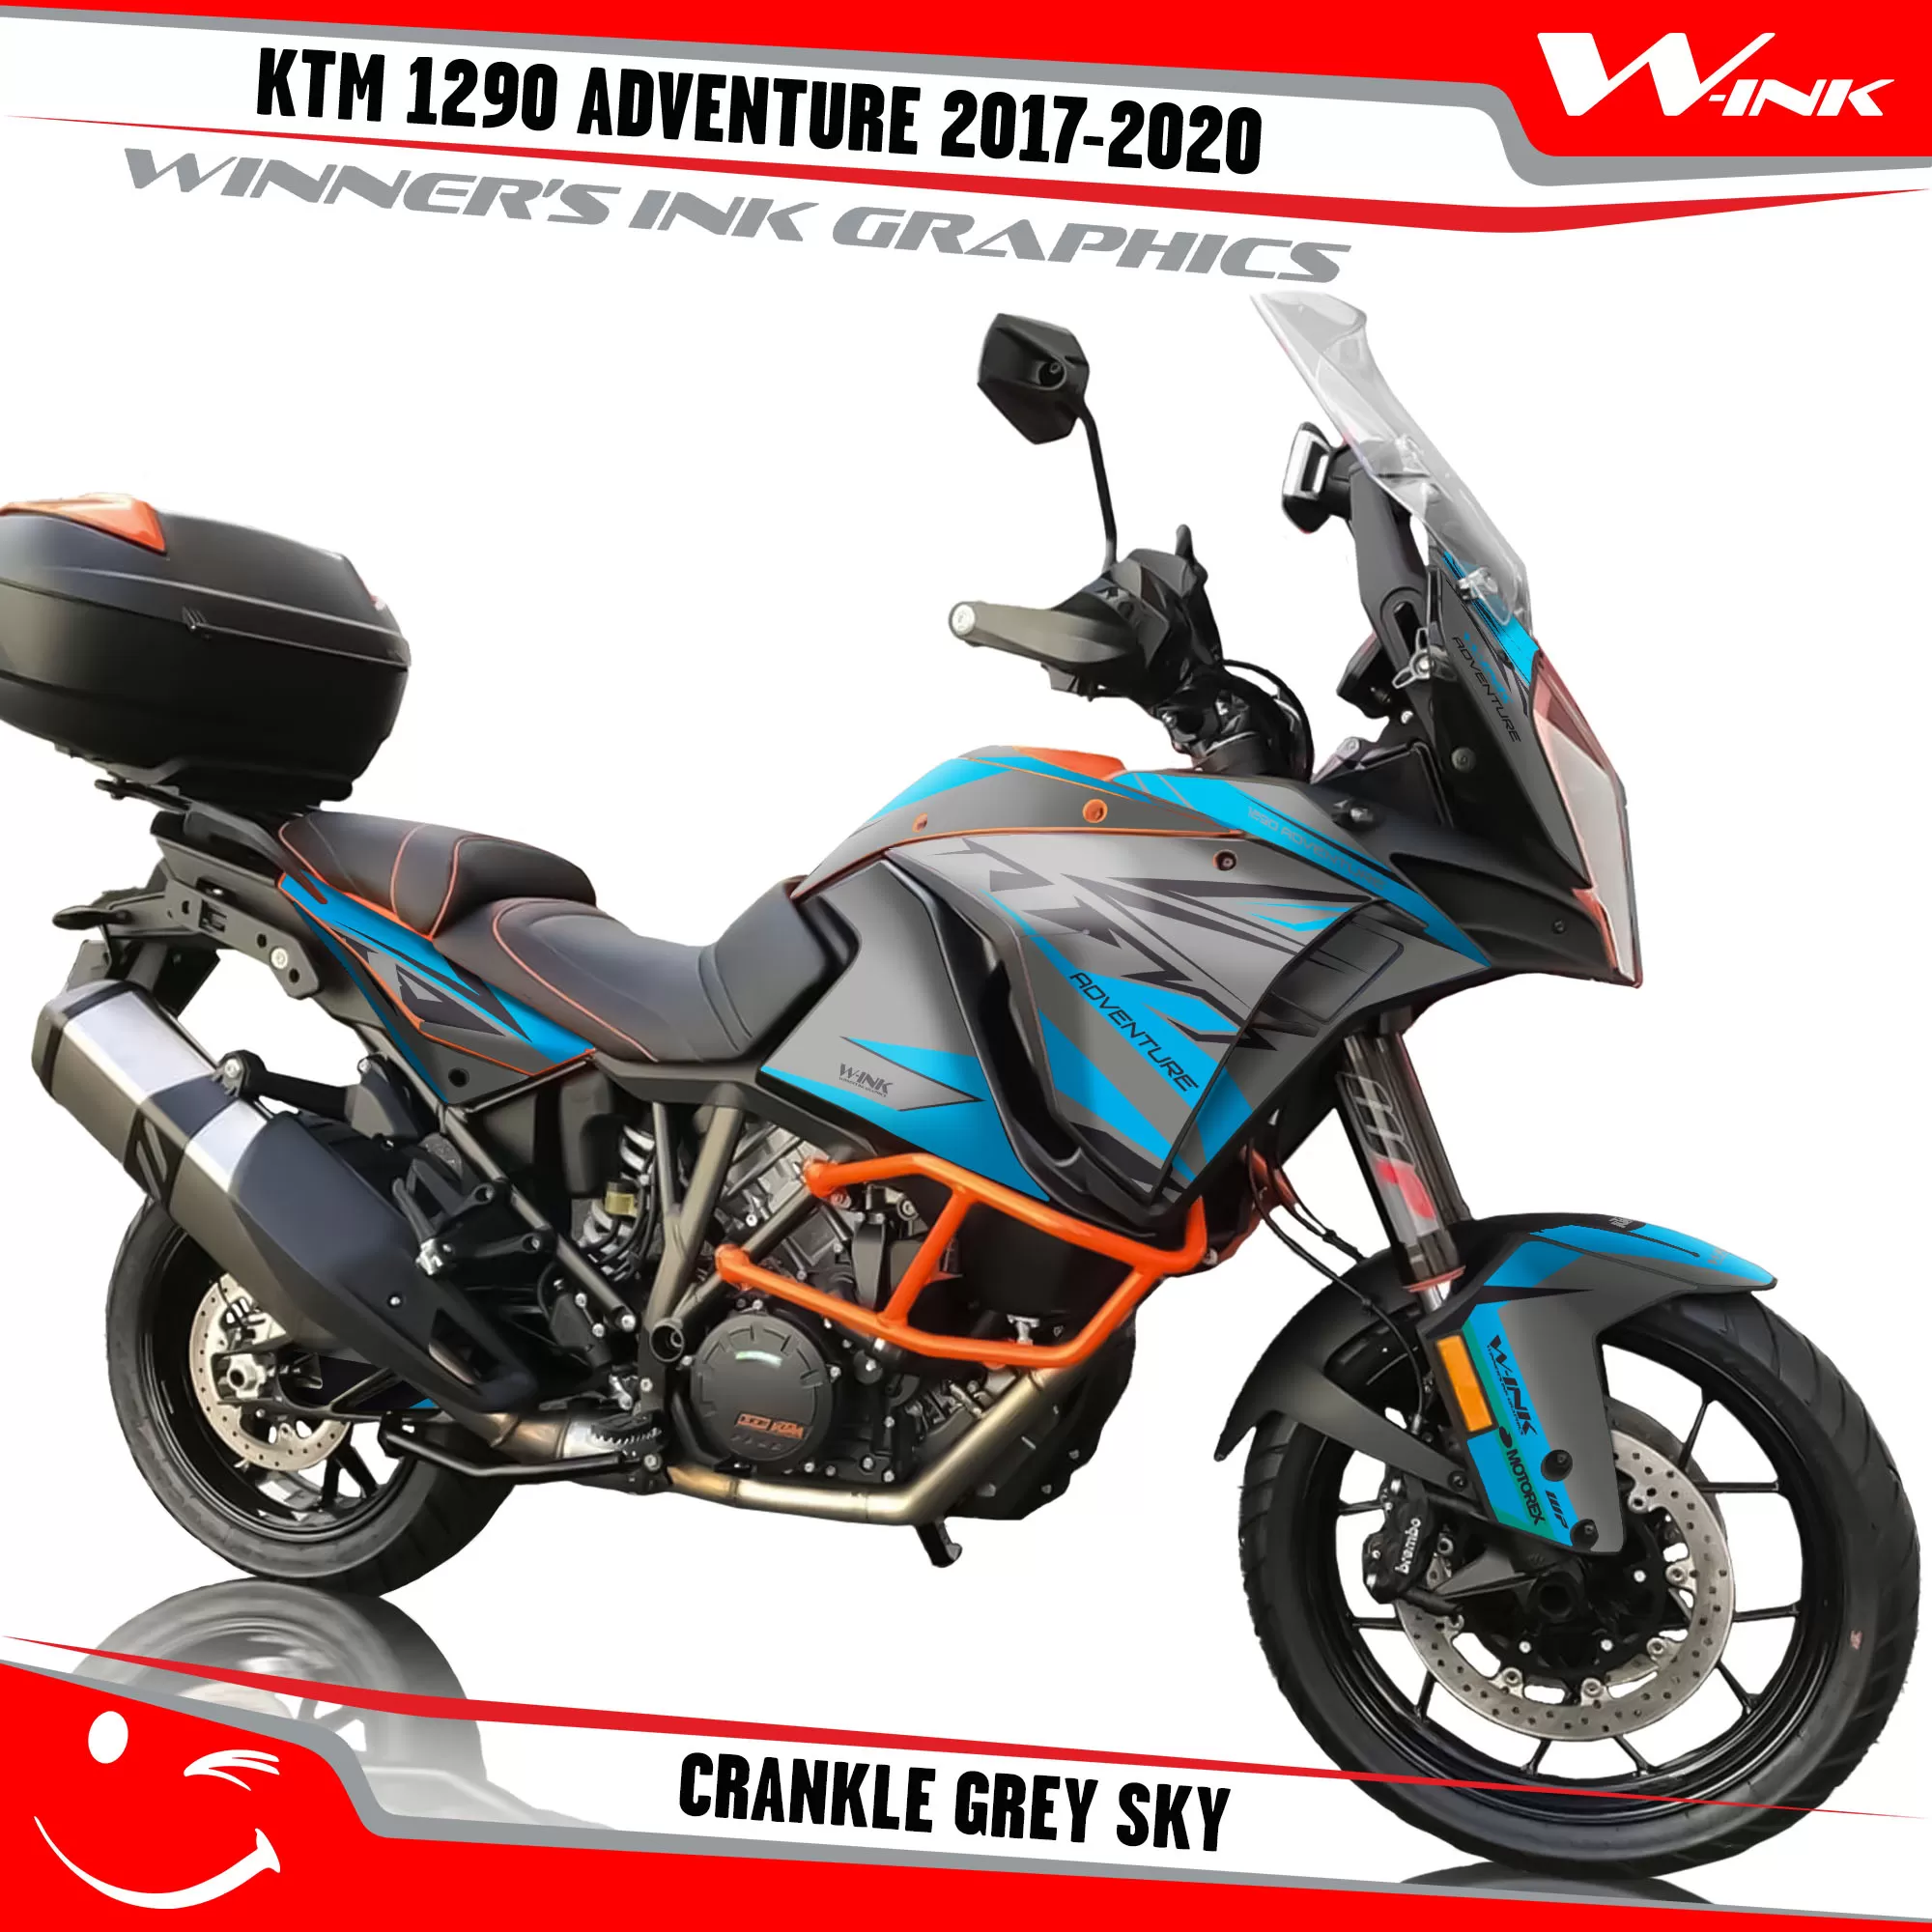 KTM-Adventure-1290-2017-2018-2019-2020-graphics-kit-and-decals-Crankle-Grey-Sky